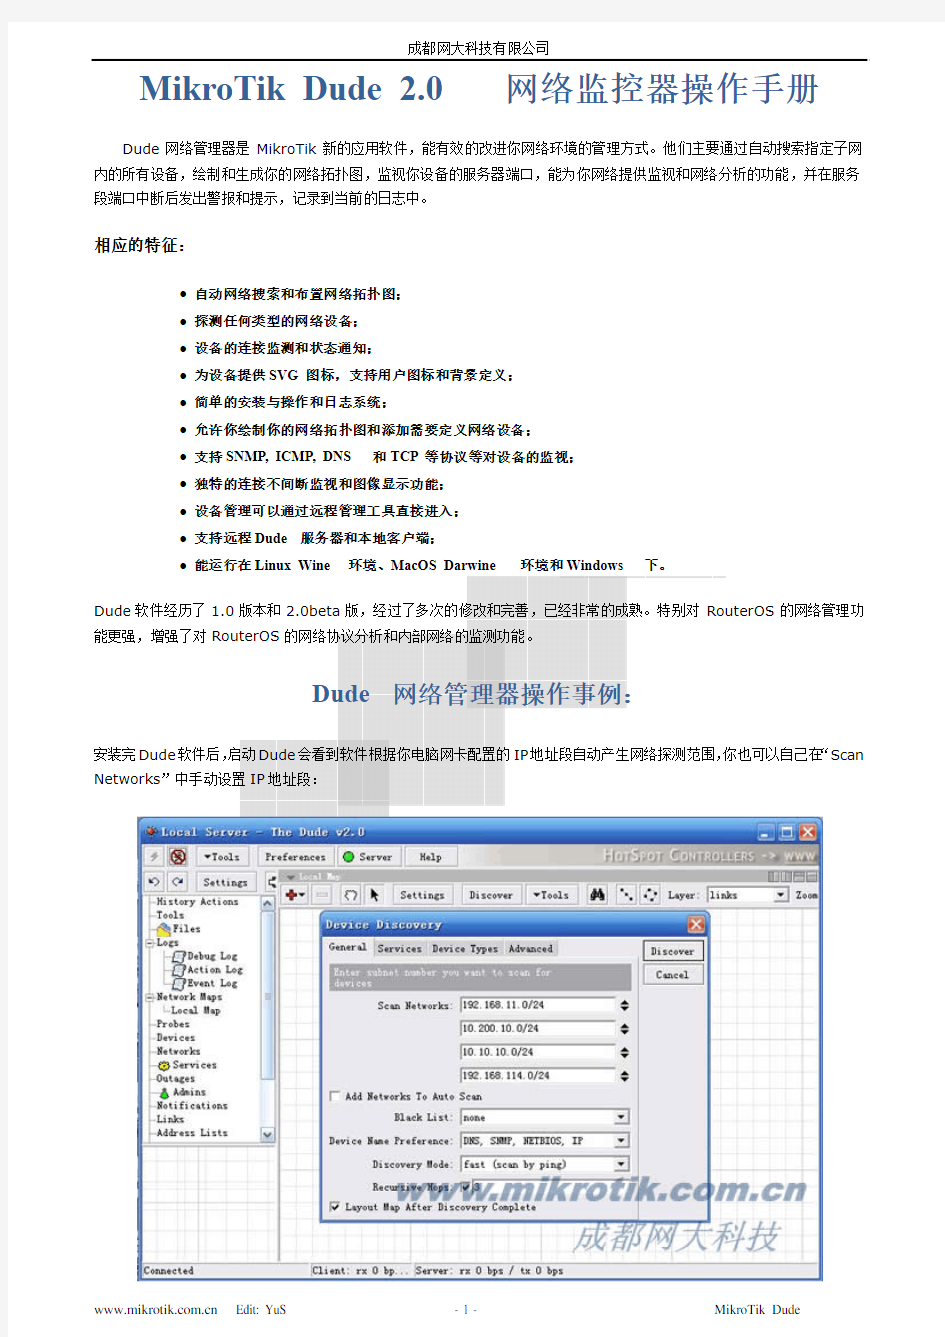 MikroTik Dude2.0网络管理软件操作手册